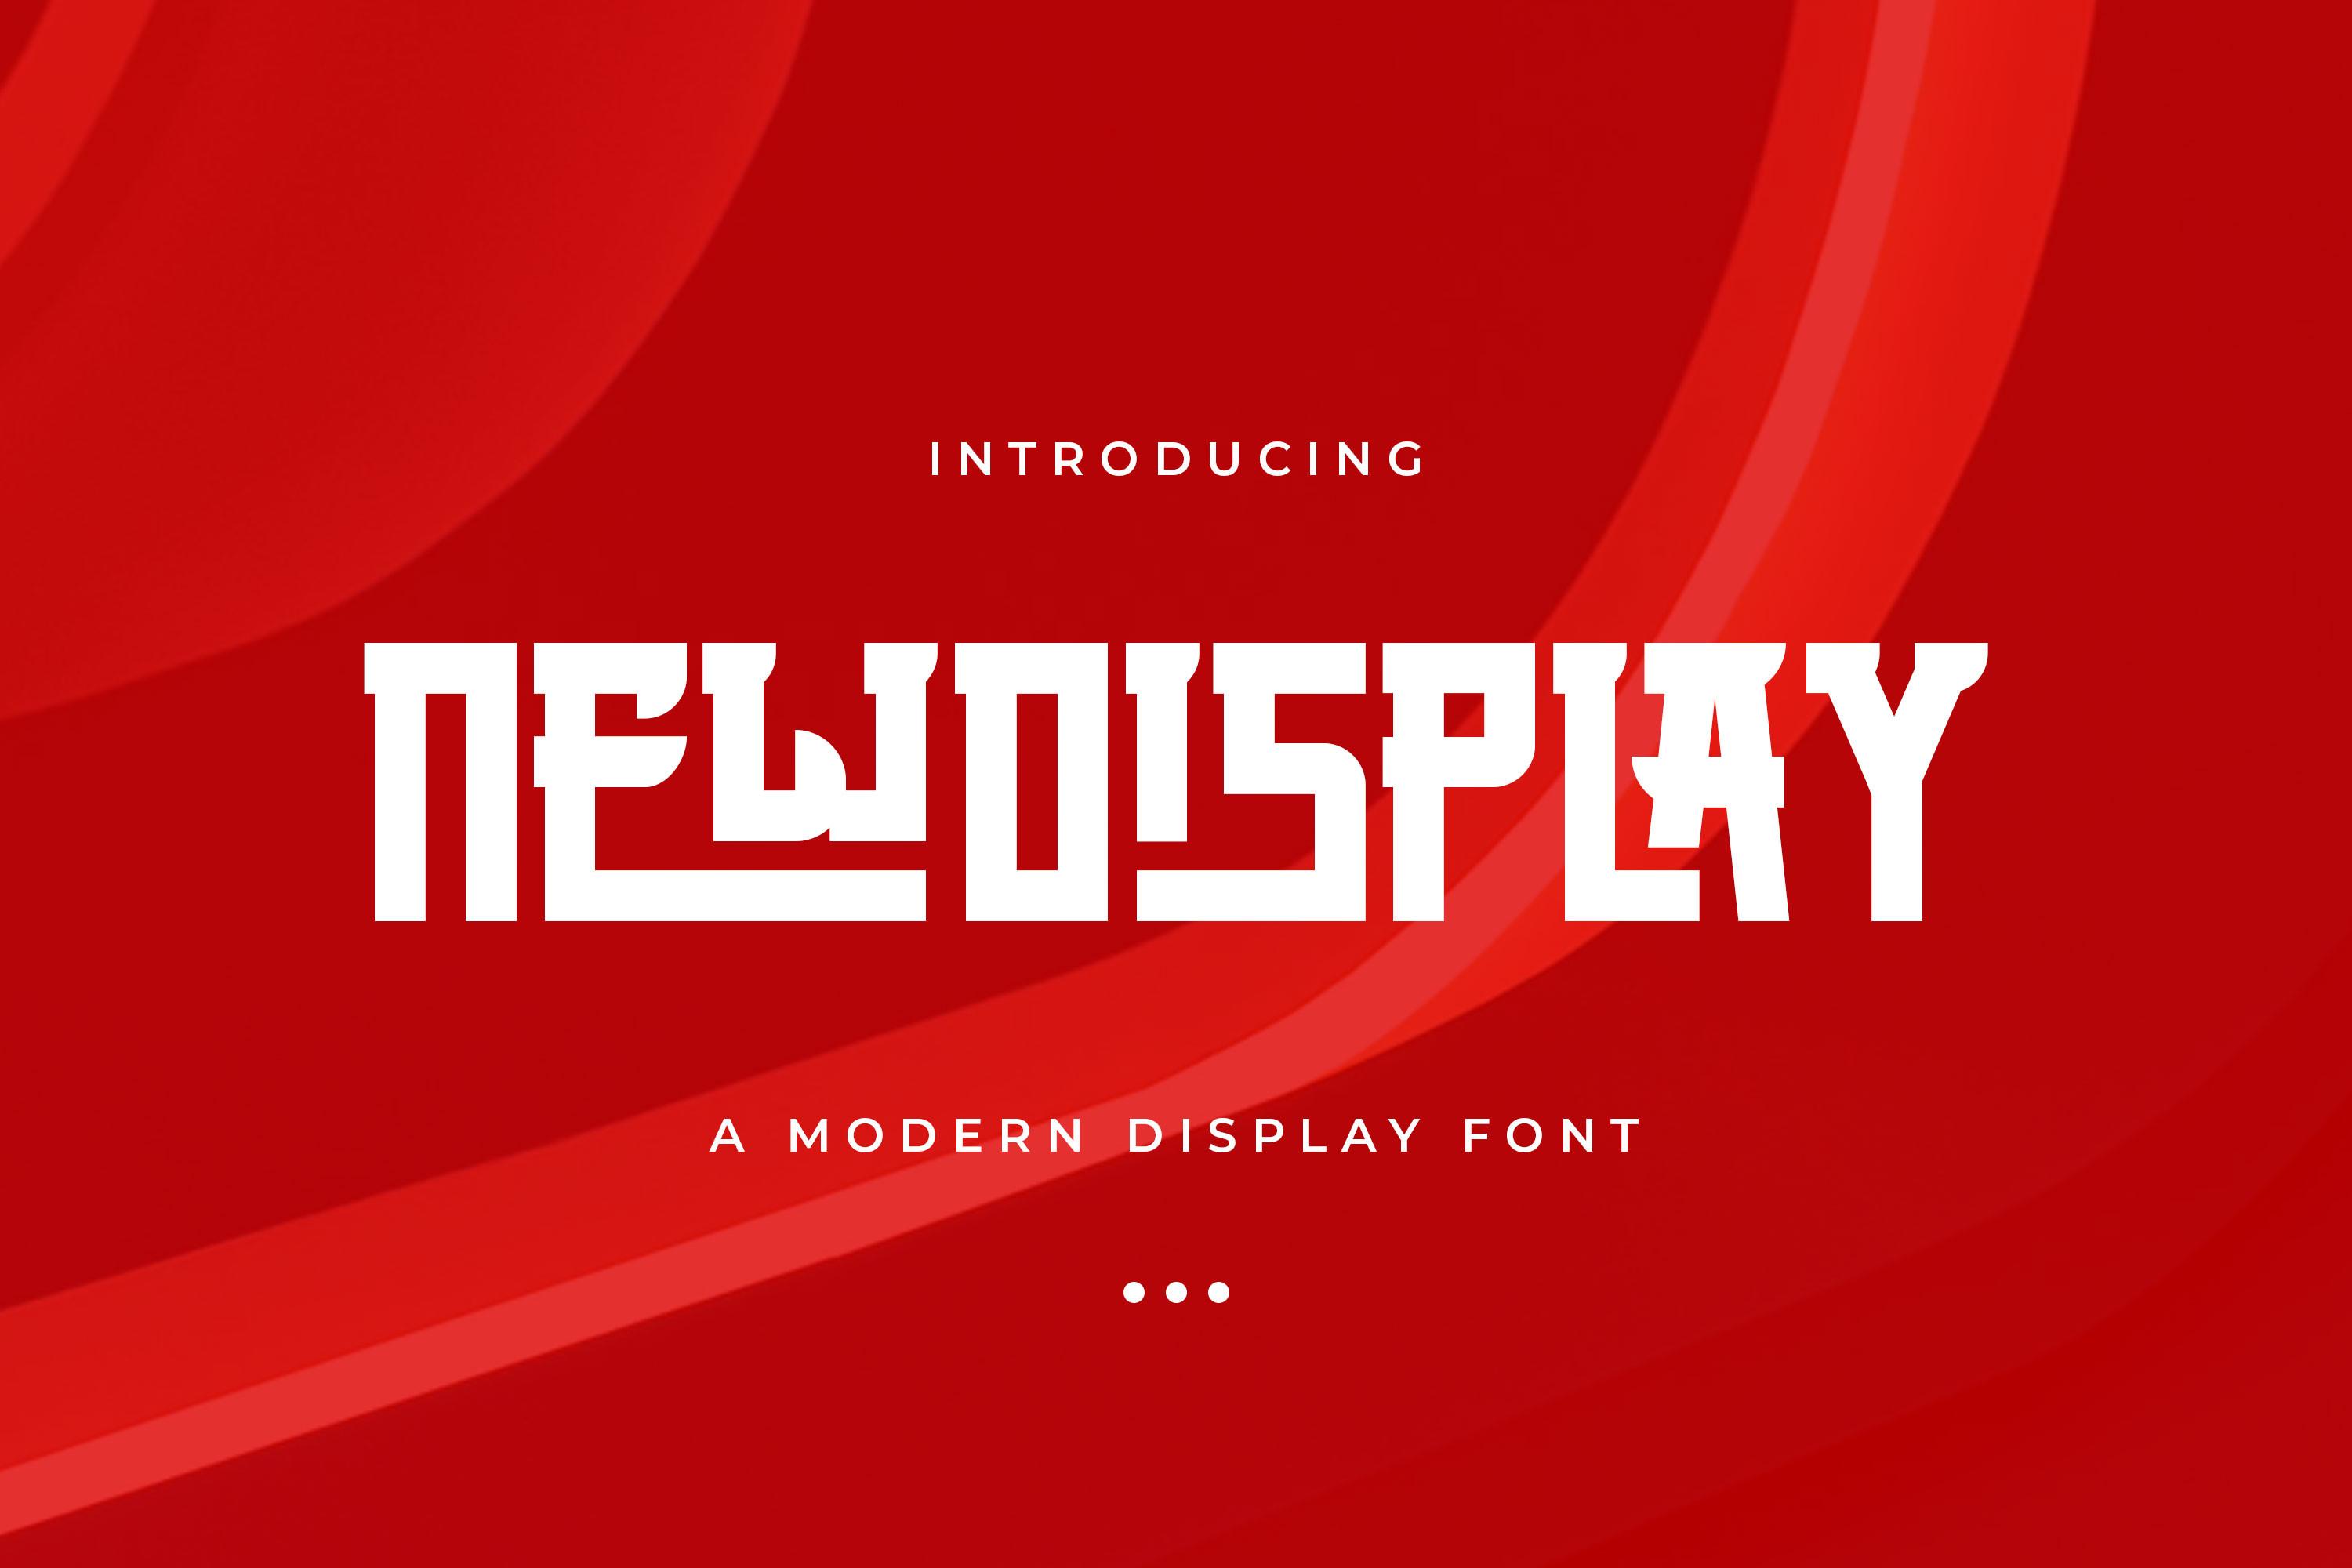 New Display Font